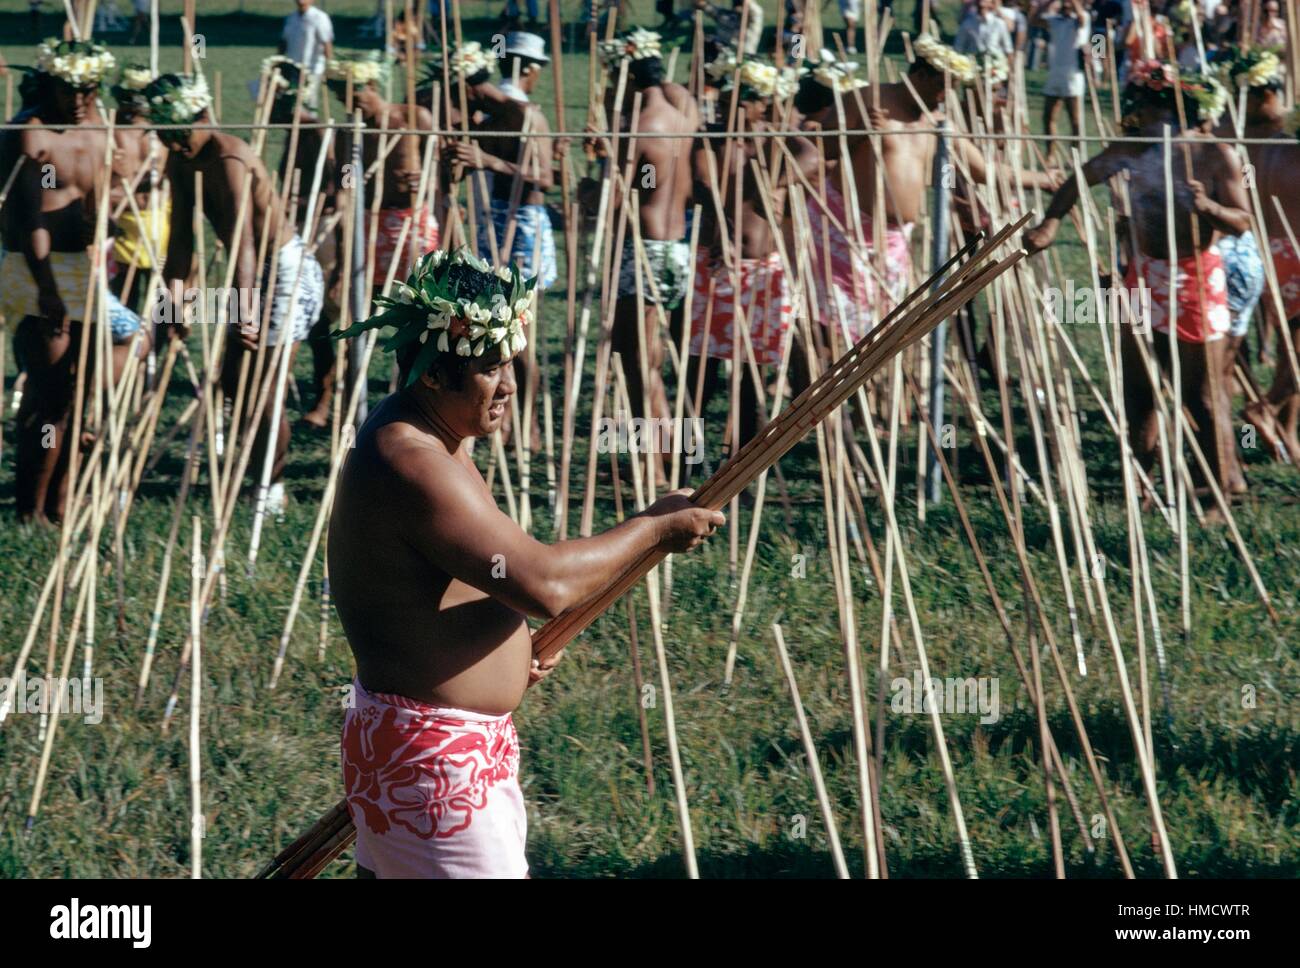 Javelin throwers during the Tiurai festival, Tahiti, Society islands, archipelago of the Windward islands, French Polynesia, Stock Photo